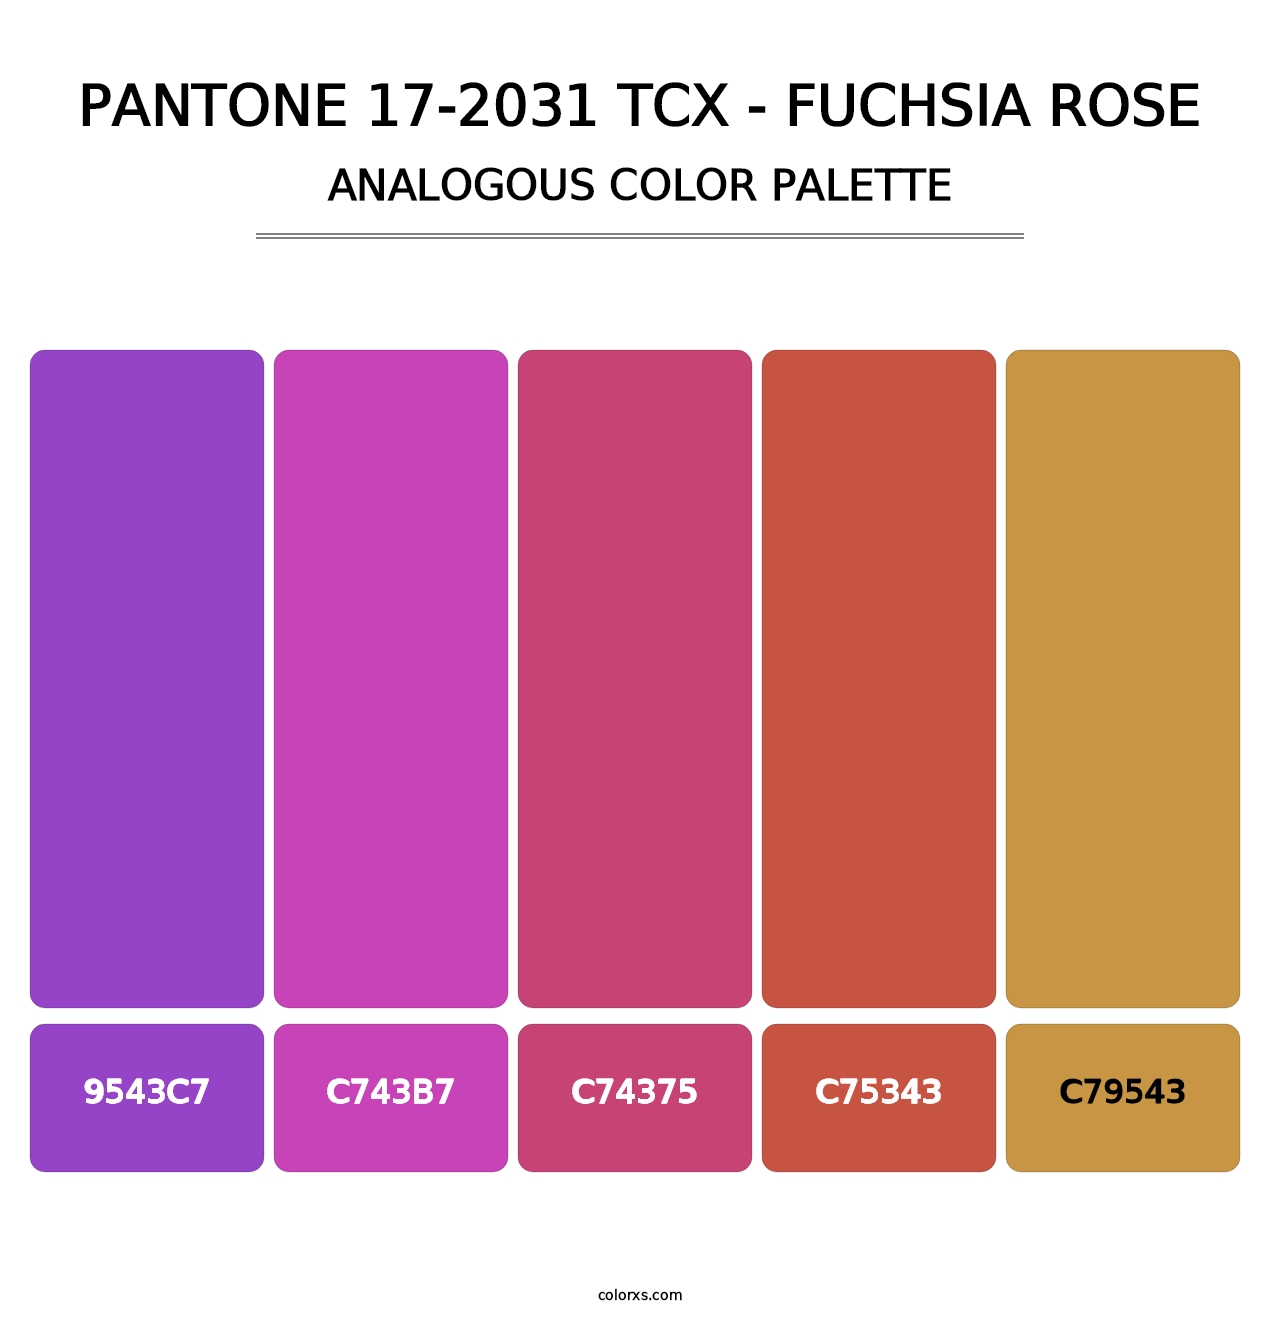 PANTONE 17-2031 TCX - Fuchsia Rose - Analogous Color Palette